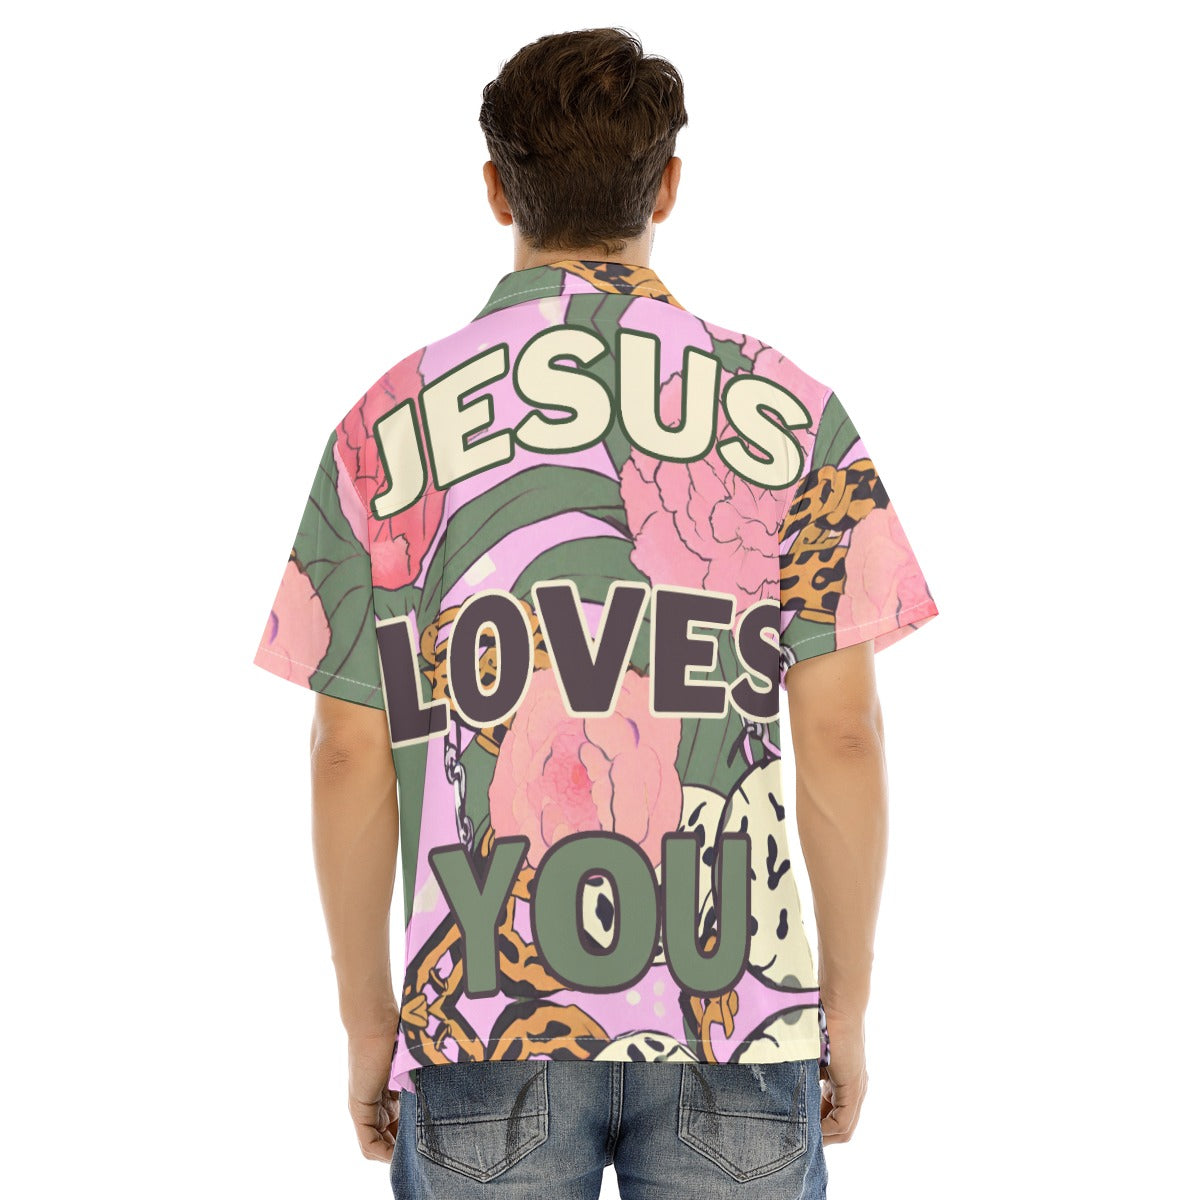 Jesus Loves You Short Sleeves Shirt